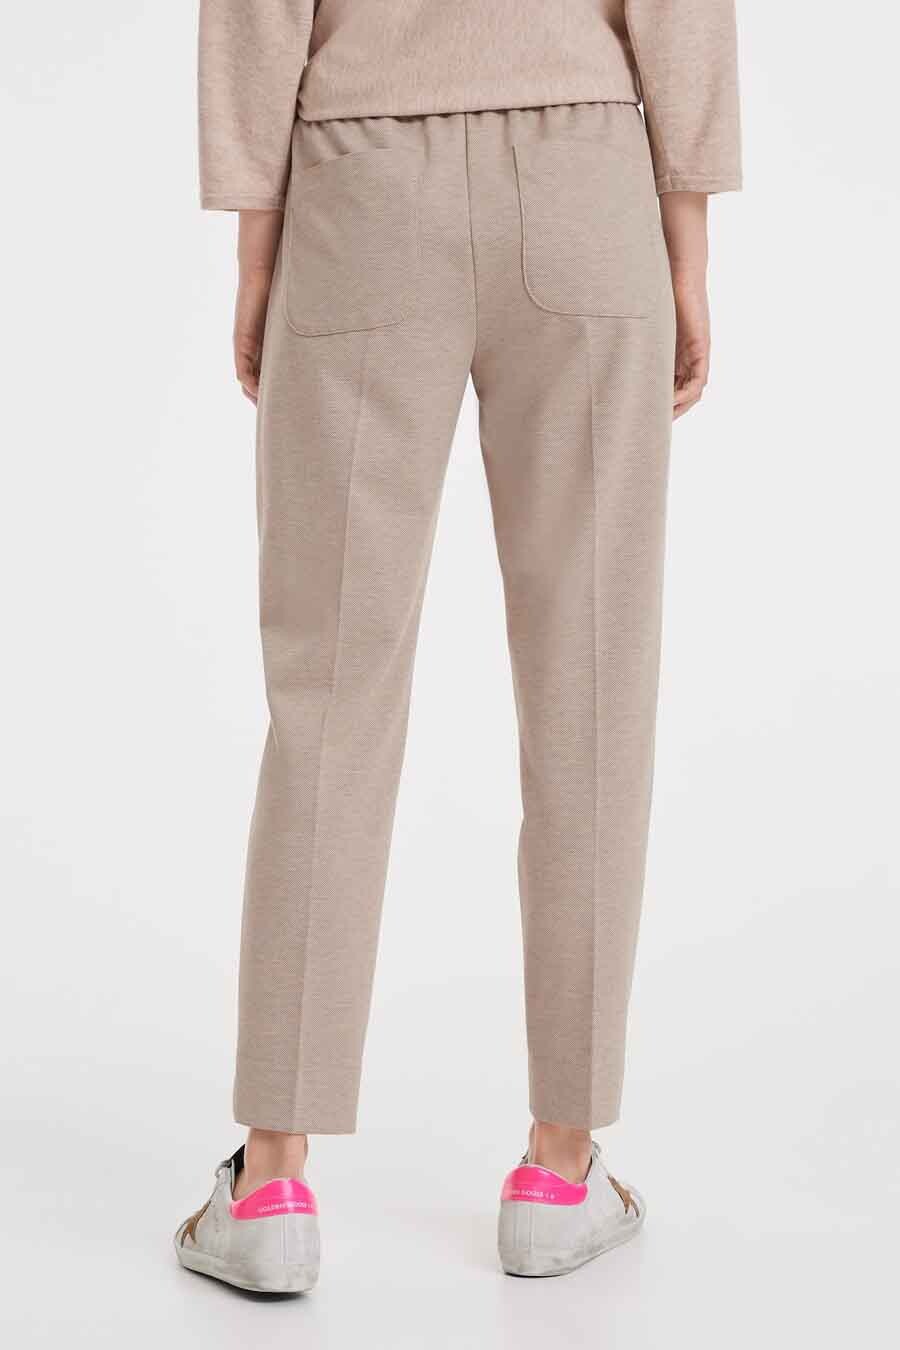 Mode Pantalons Pantalons en jersey Opus Pantalon en jersey gris clair-rouge motif \u00e0 carreaux style d\u00e9contract\u00e9 